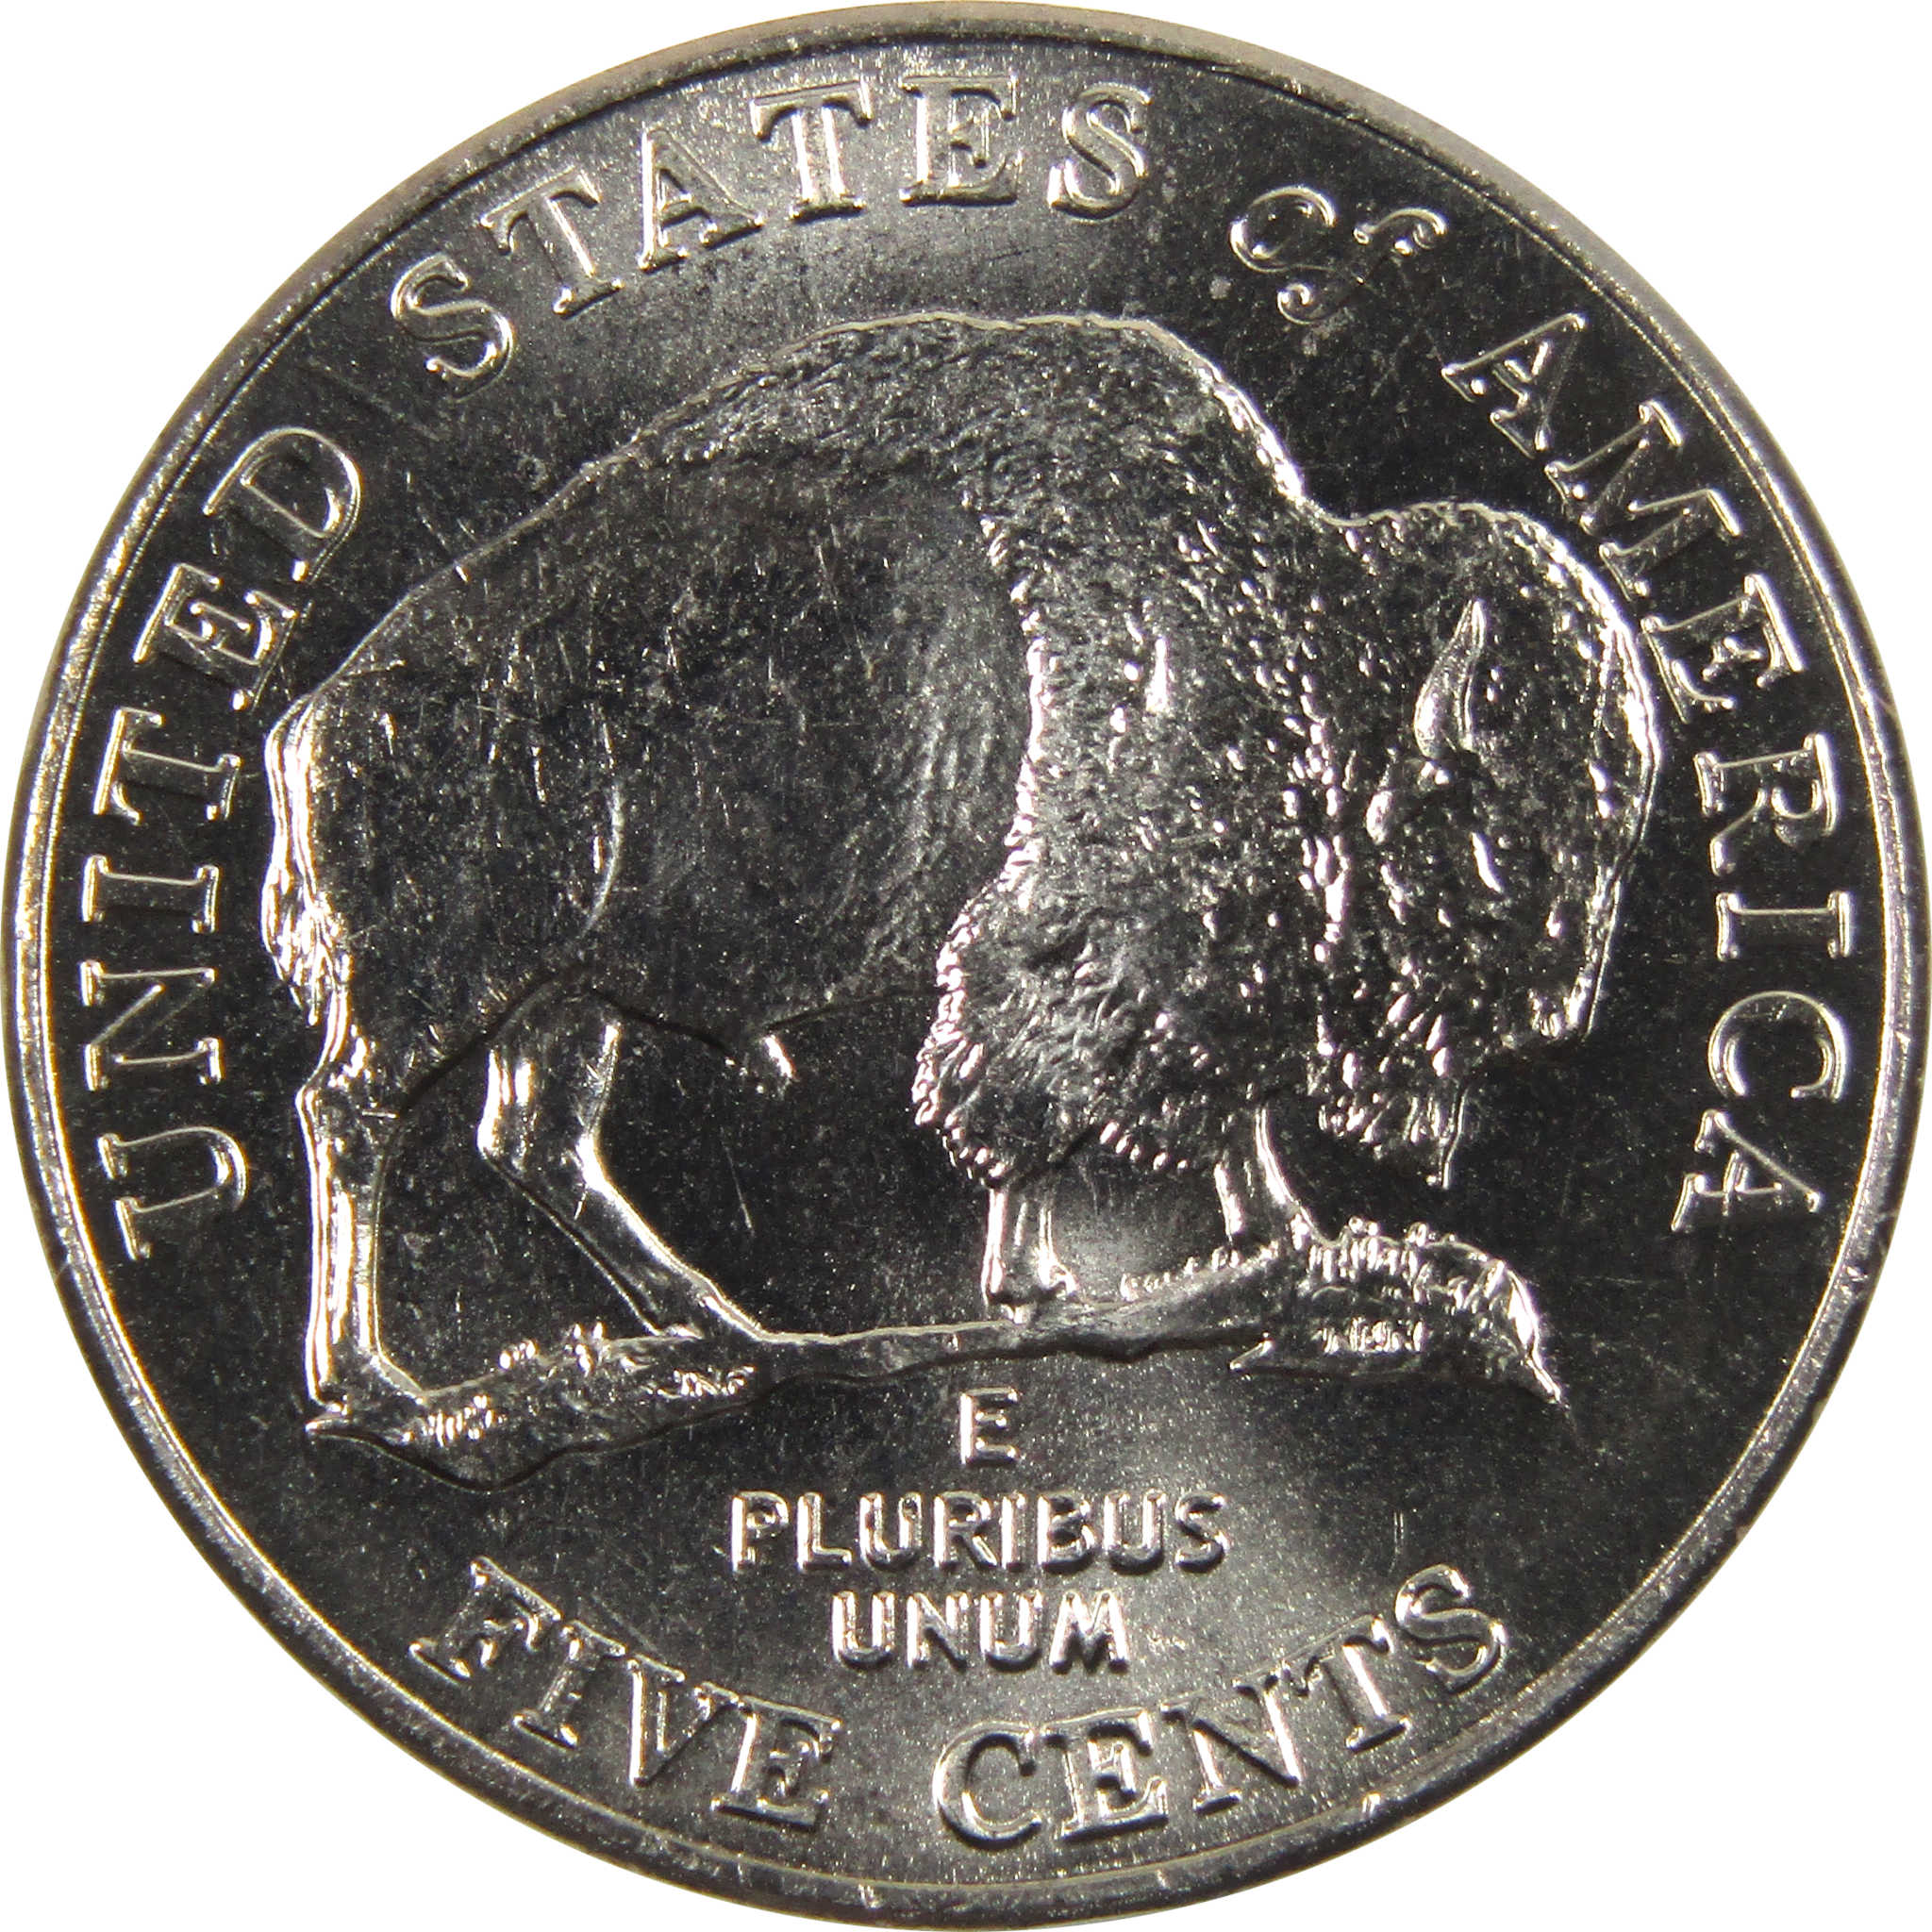 2005 D American Bison Jefferson Nickel BU Uncirculated 5c Coin